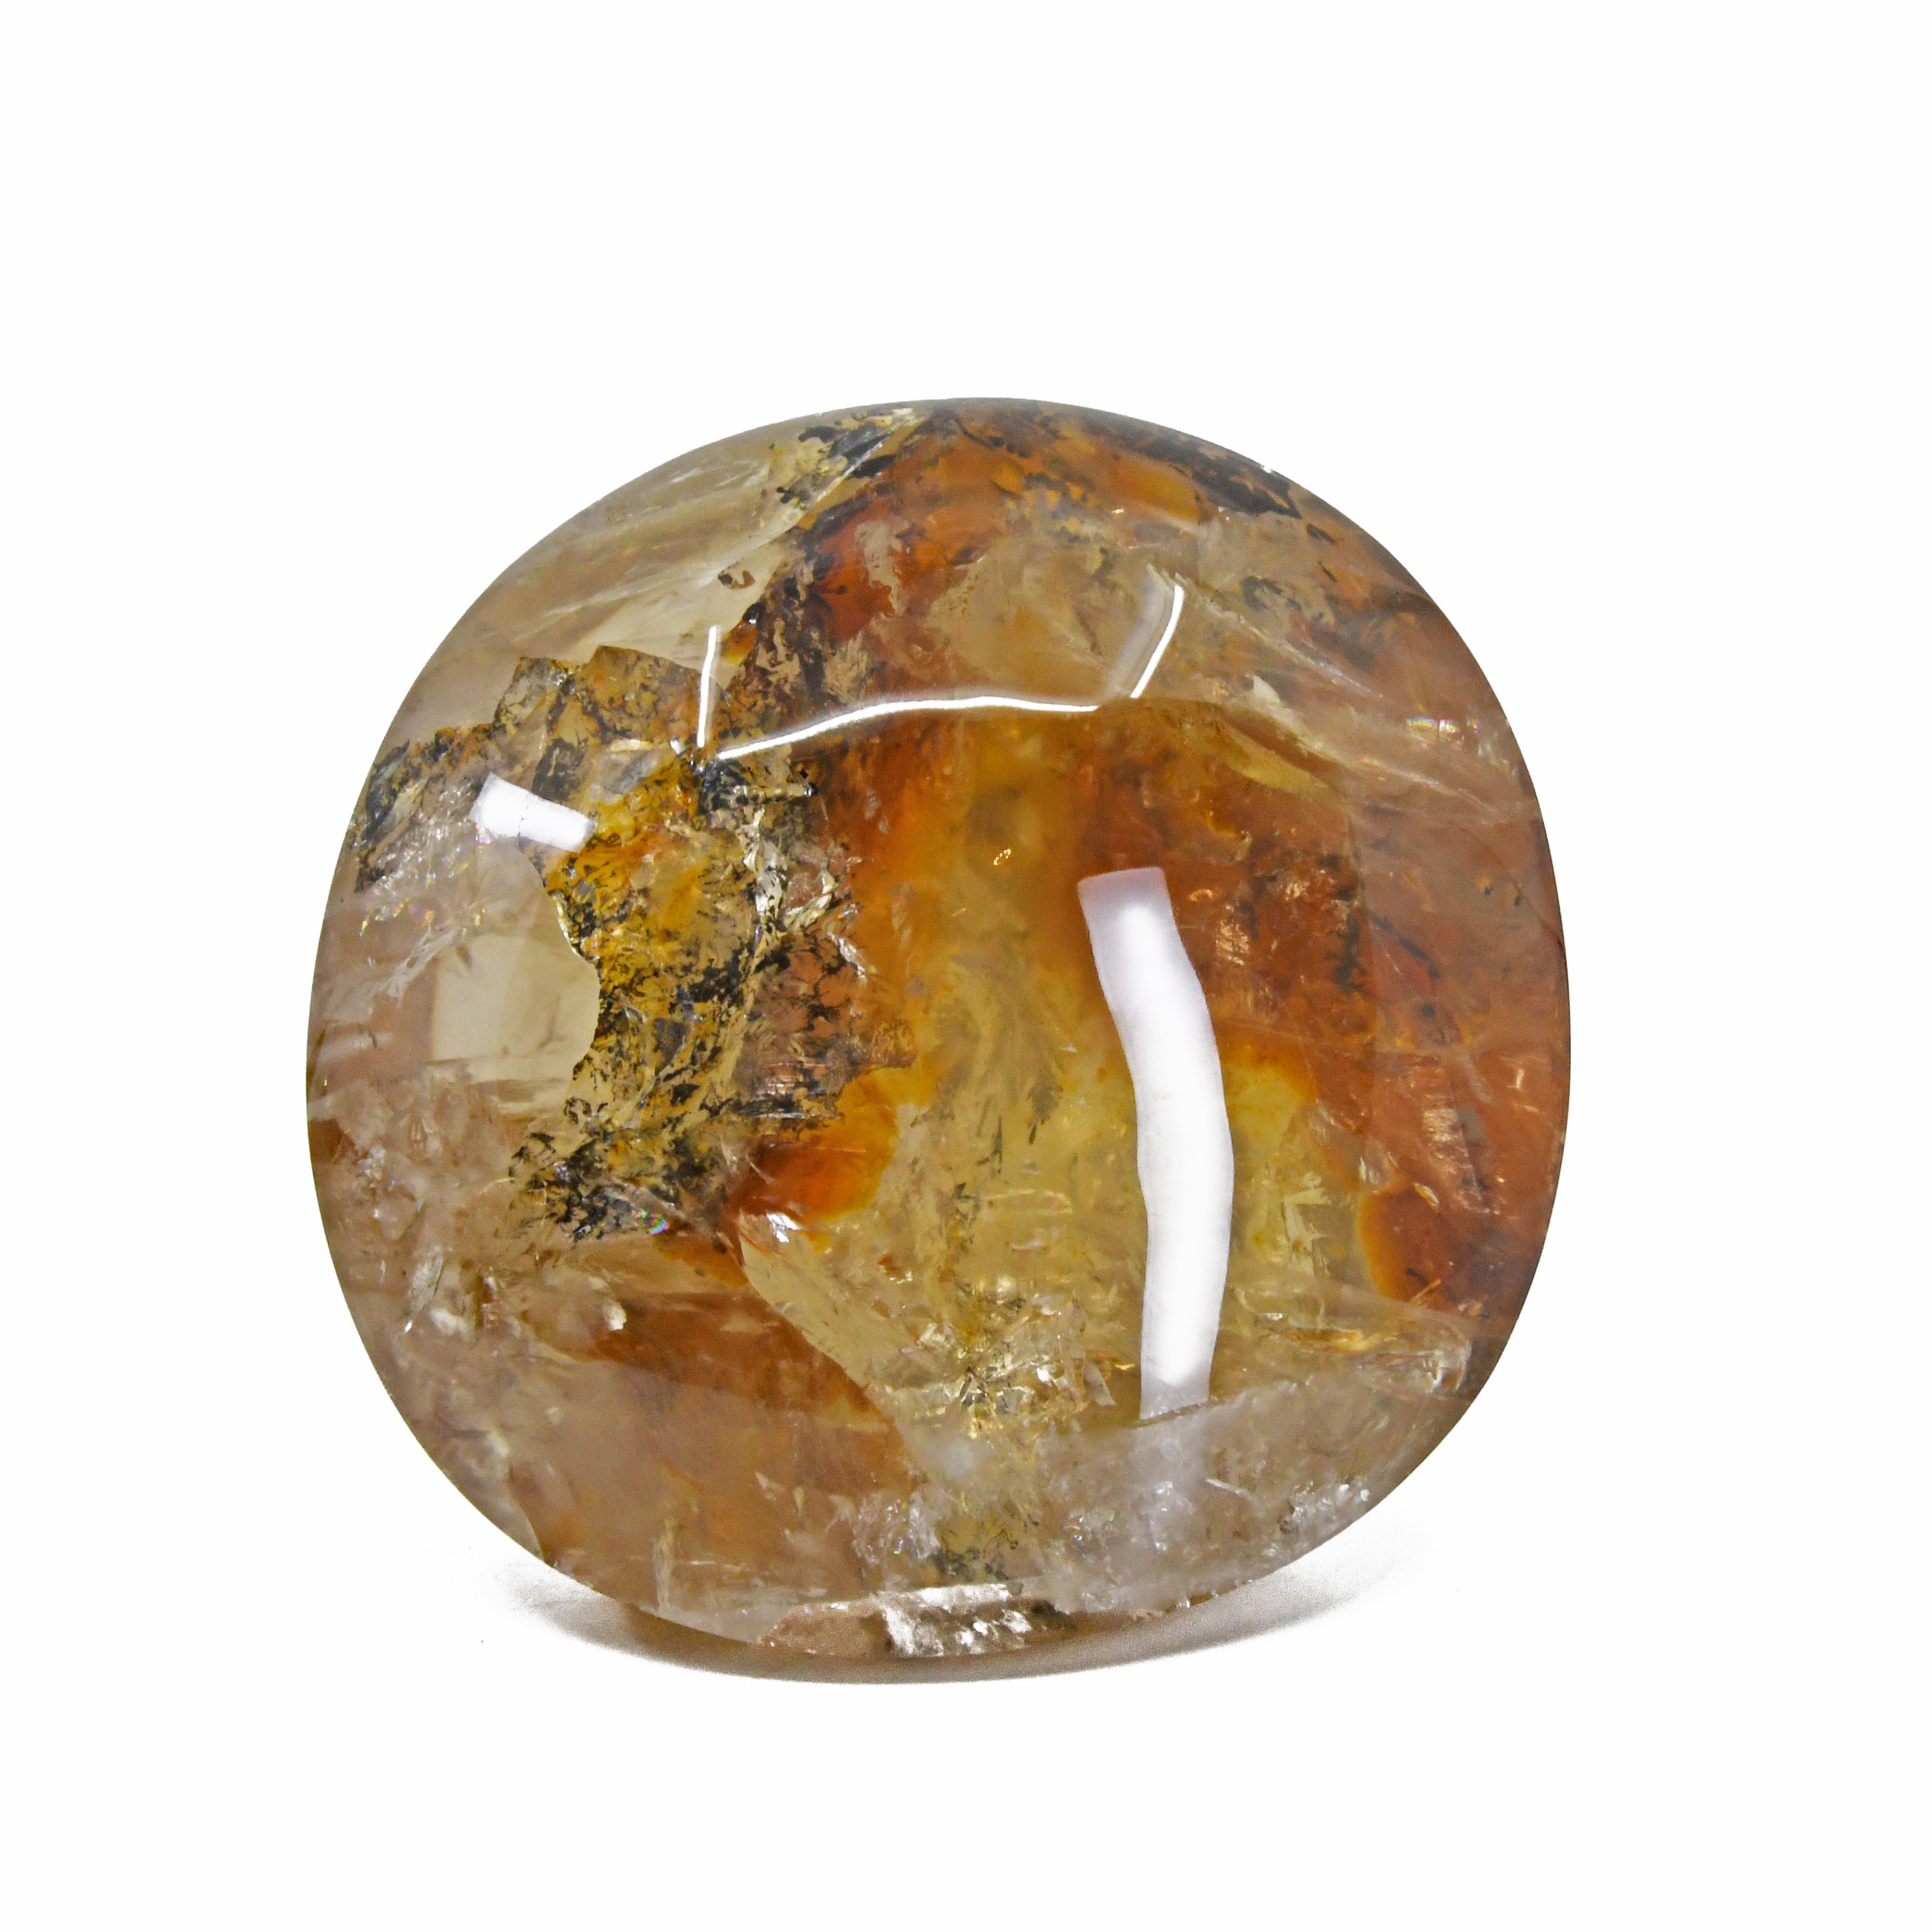 Dendritic Quartz 6.25 inch 5.45 lb Polished Natural Crystal - Brazil - GGH-215 - Crystalarium